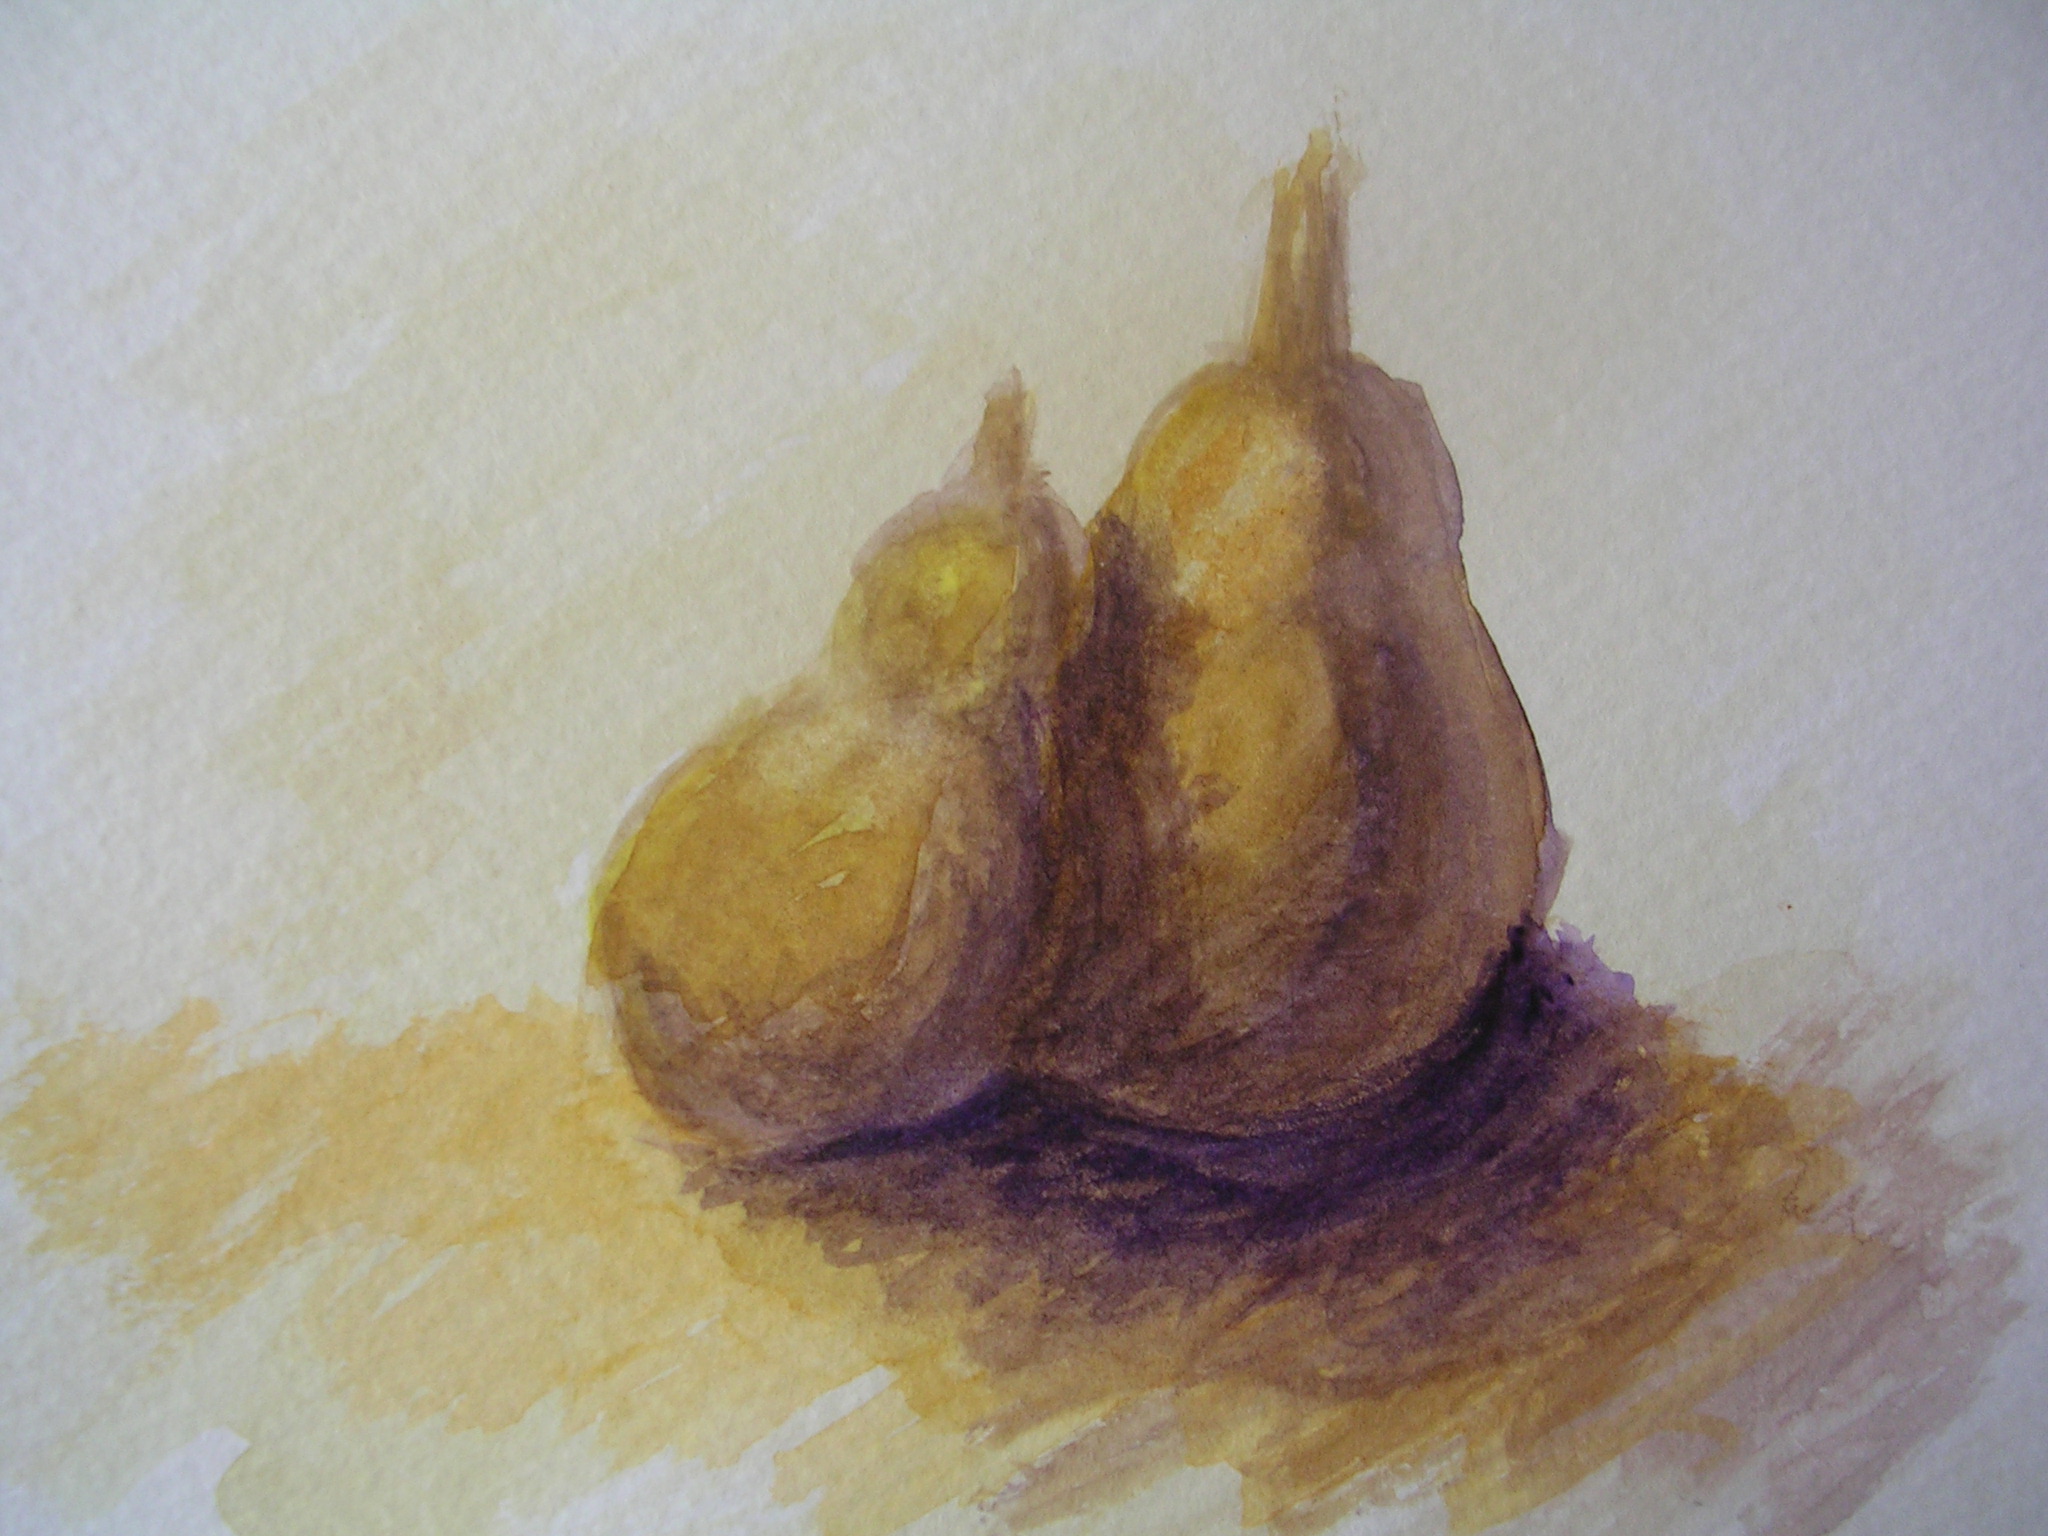 Pair of Pears watercolour